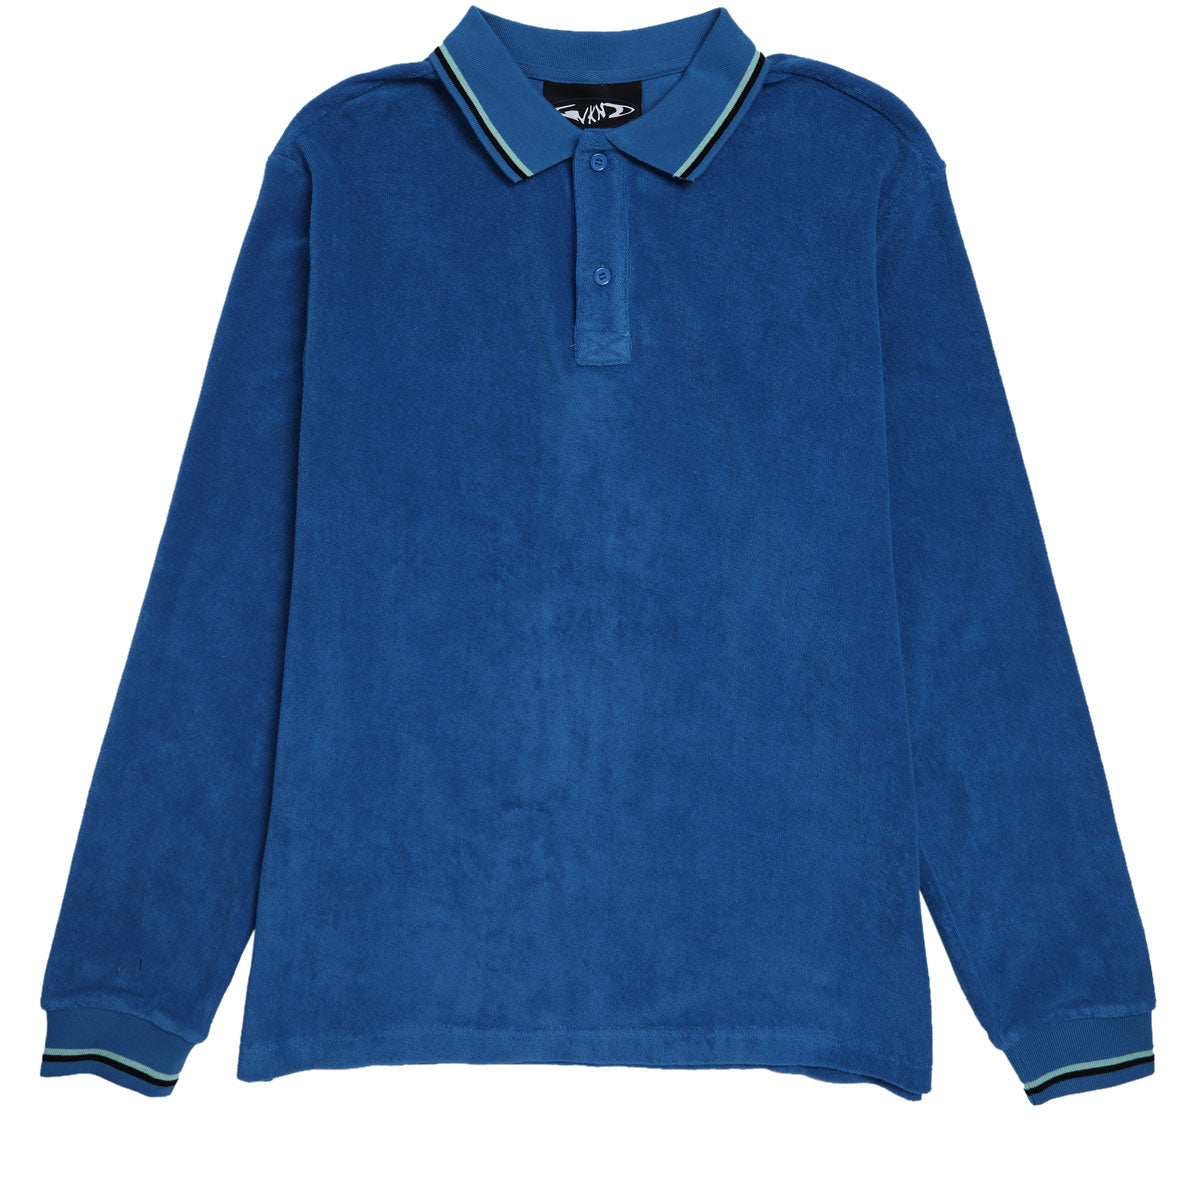 WKND Terry Long Sleeve Polo Shirt - Blue image 1